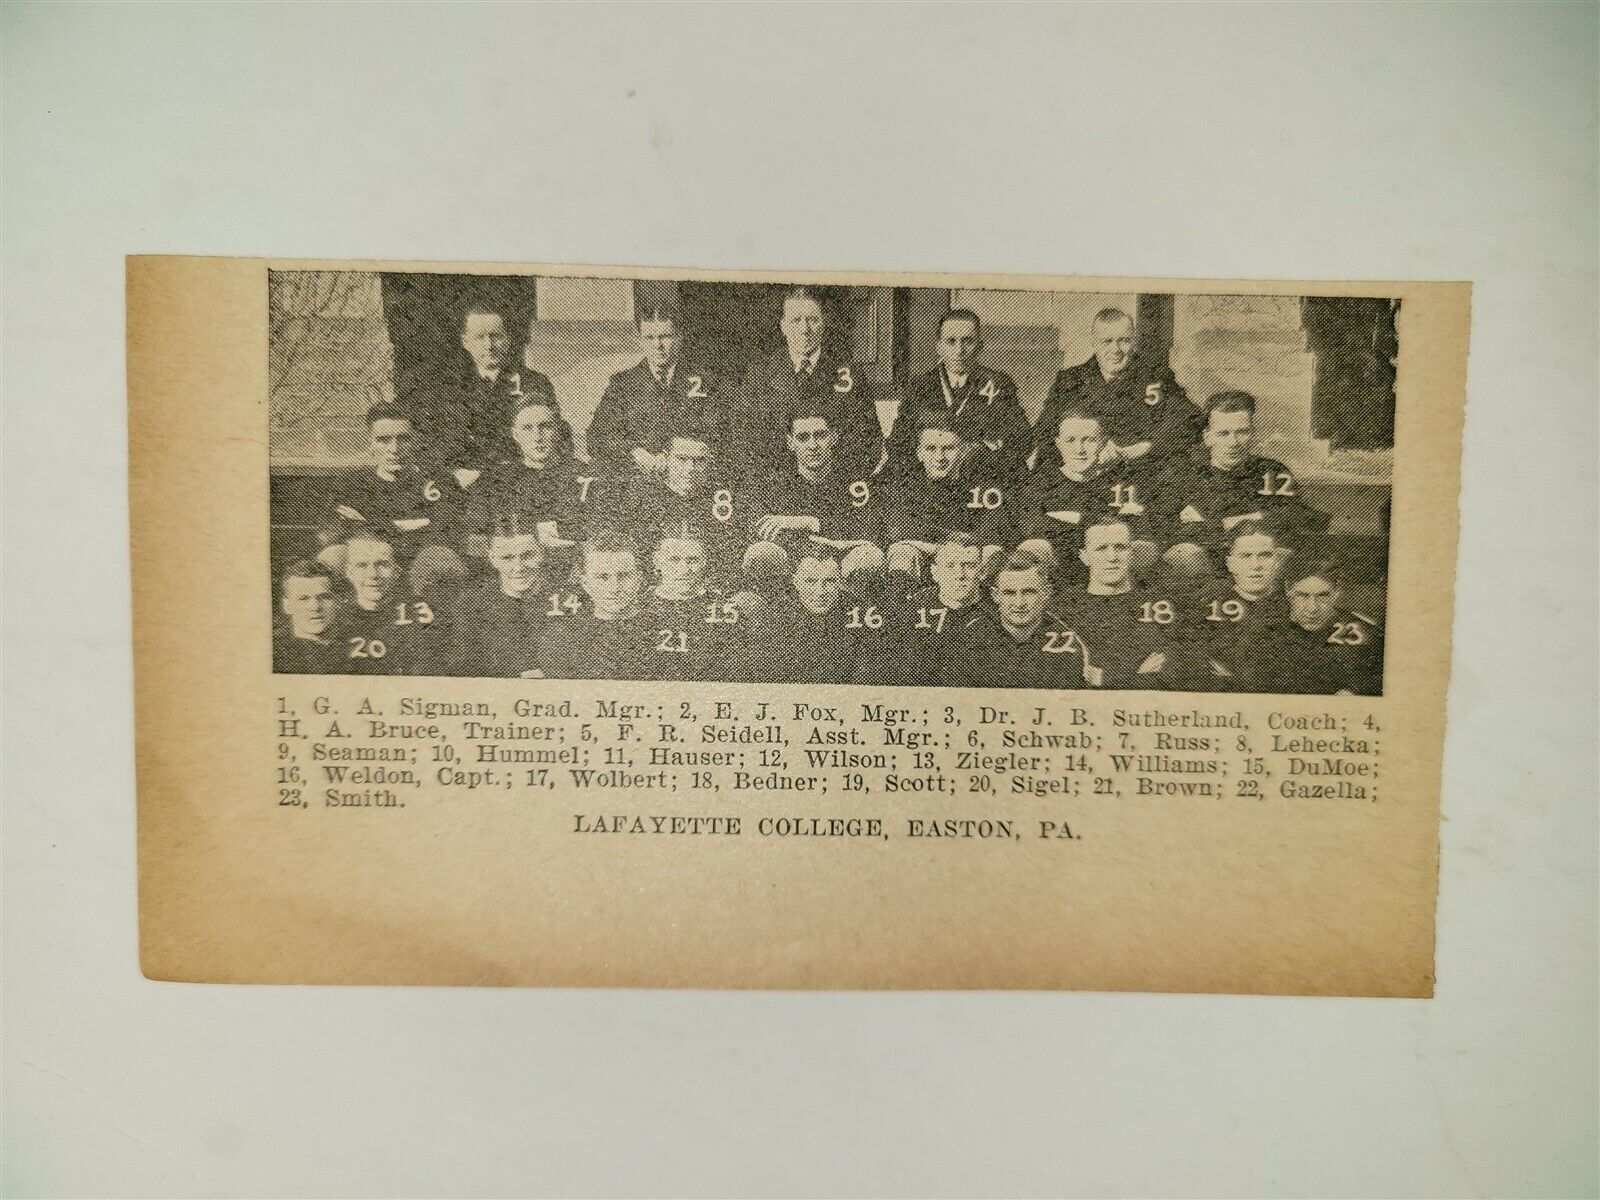 Lafayette College Easton Pennsylvania 1919 Football Team Picture